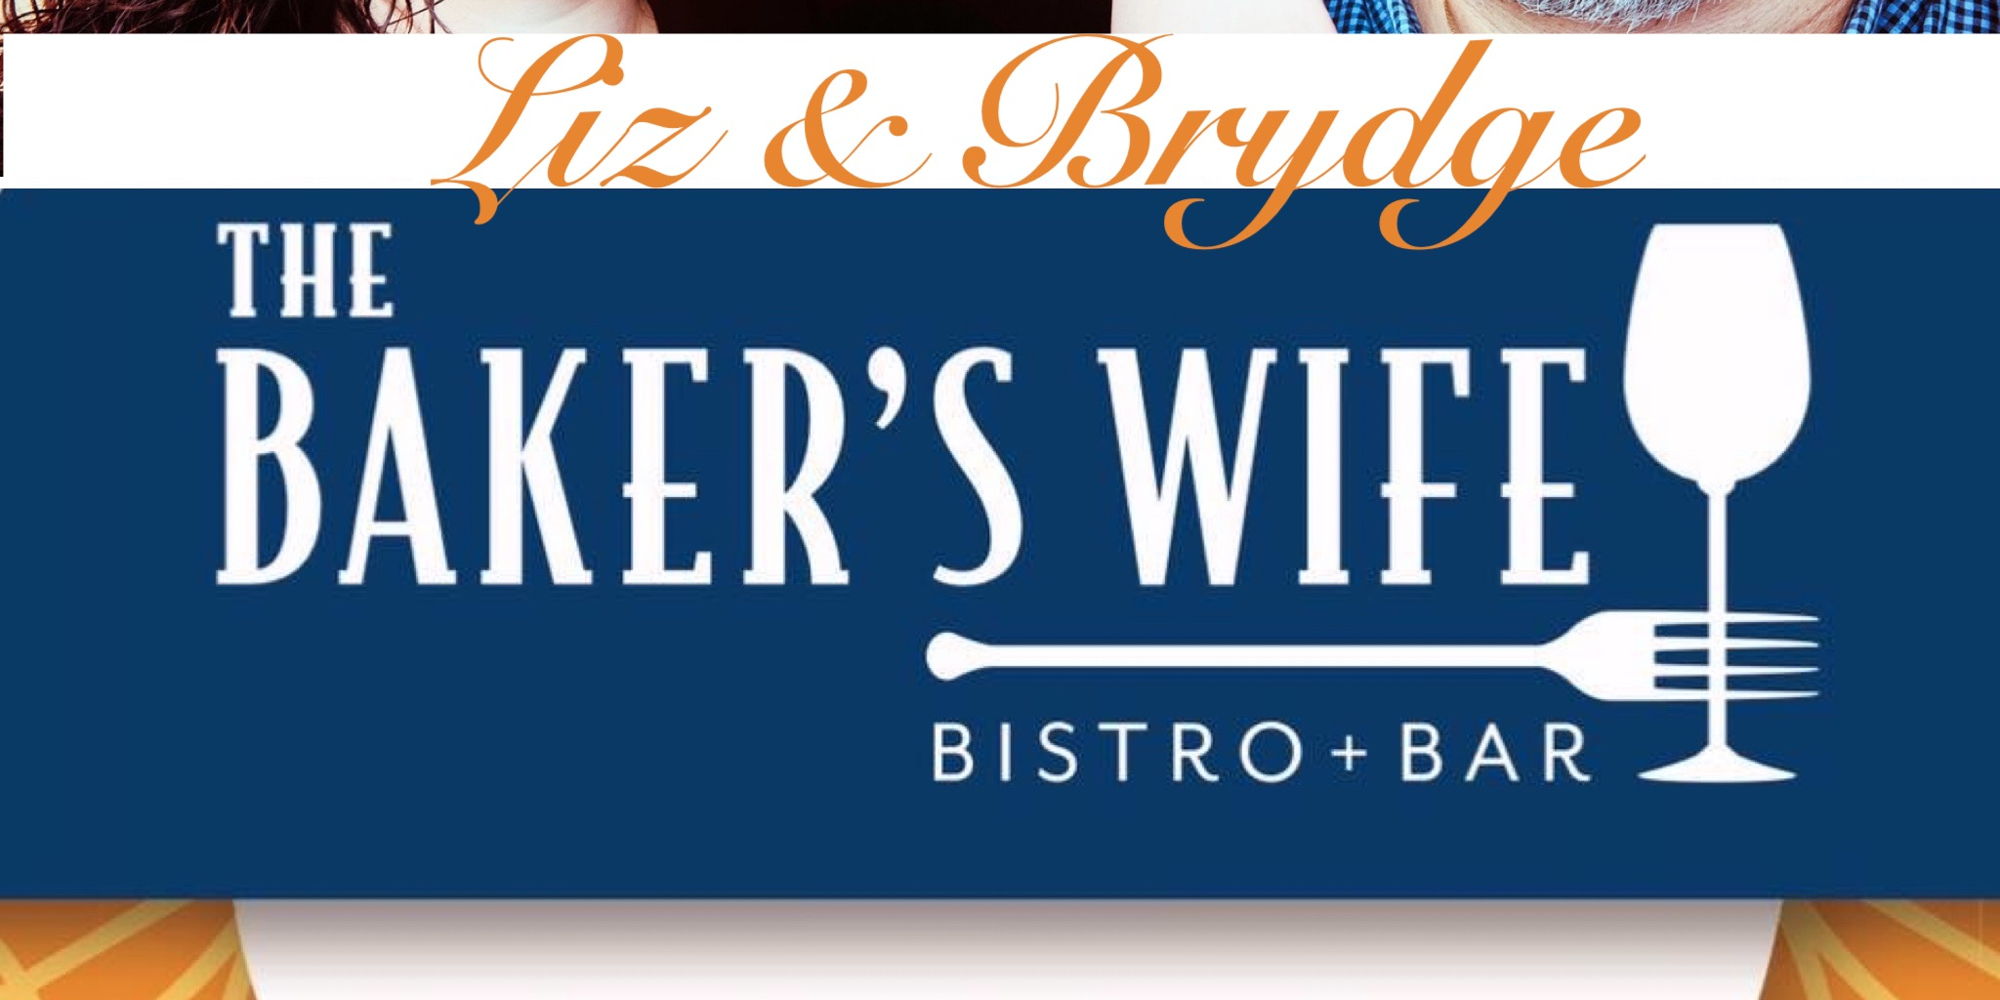 Sunday Jazz Brunch at Baker's Wife Bistro promotional image